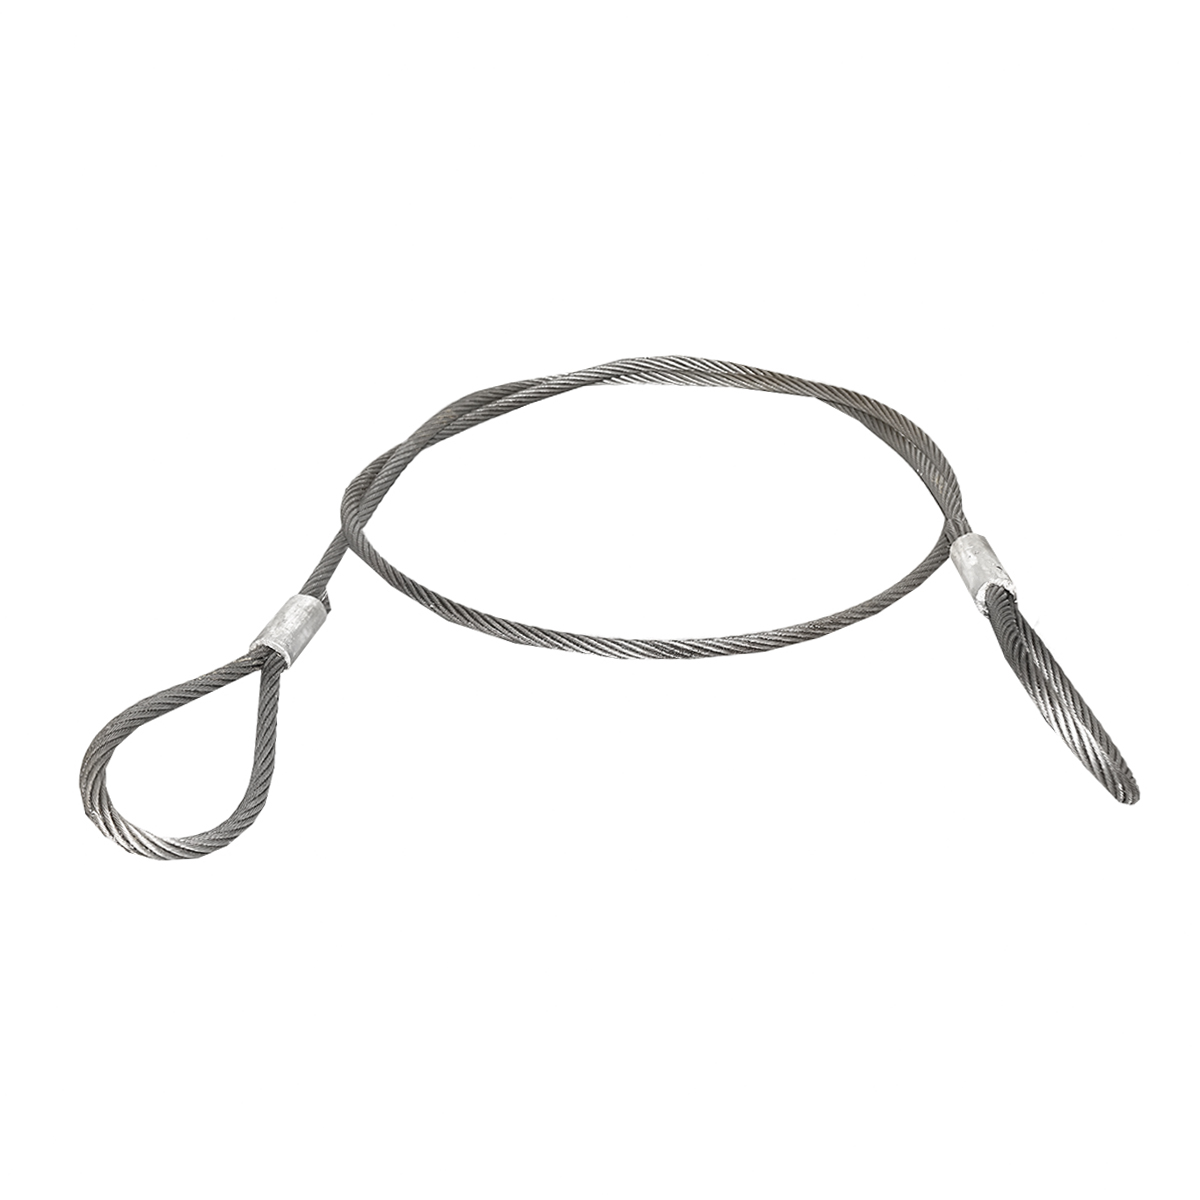 Cablu/sufa troliu din otel cu grosime de 20mm si lungime de 4m cu inele pentru tractat sau ridicat